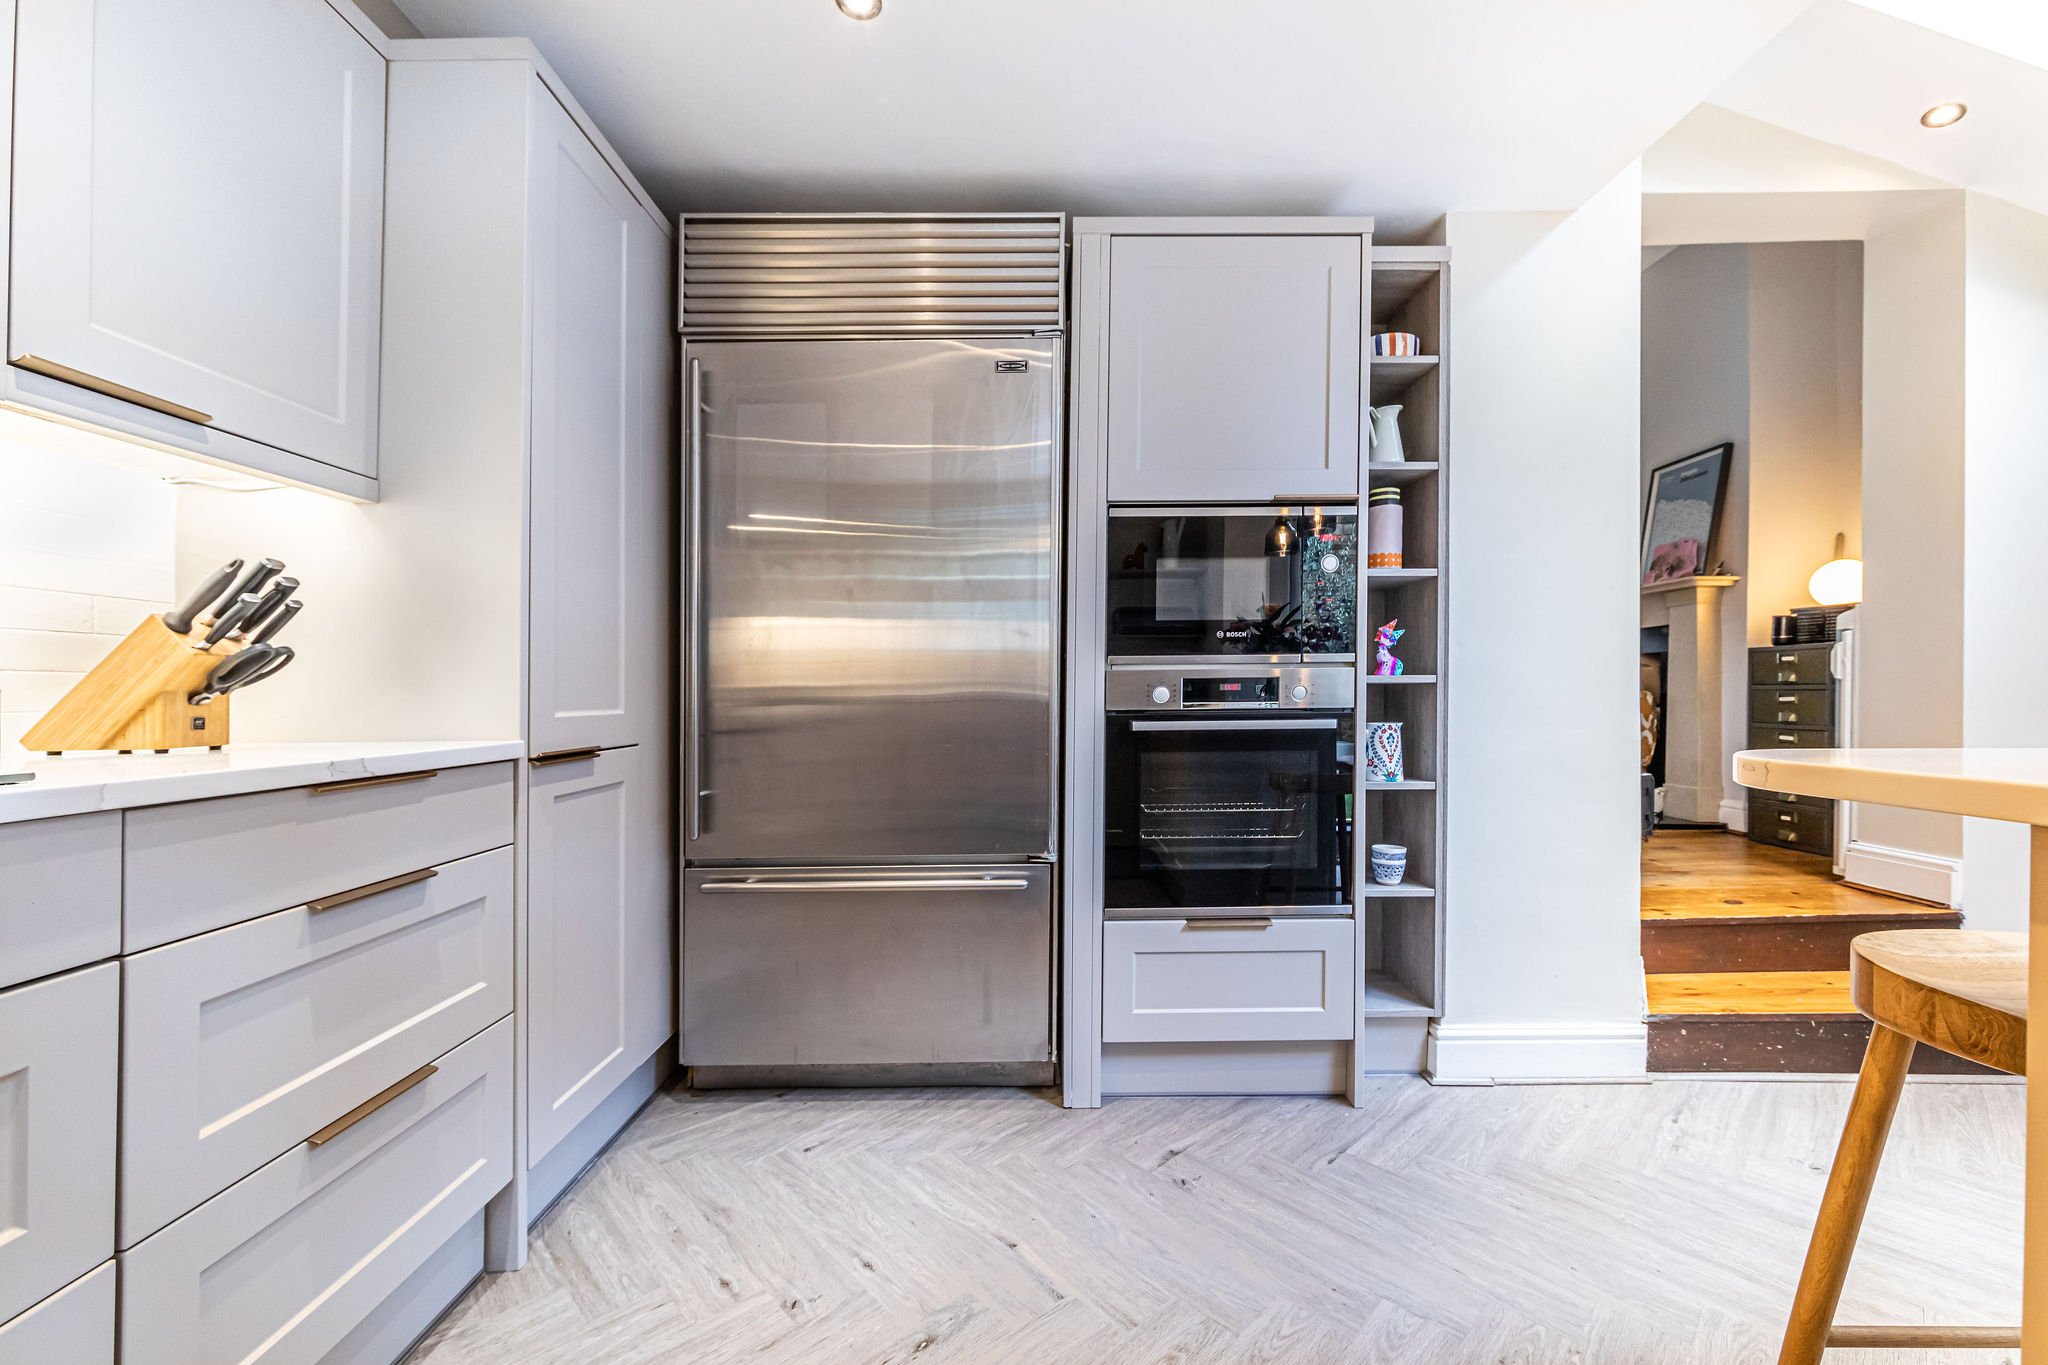 subzero fridge London kitchen interior design Orsetto Interiors.jpg